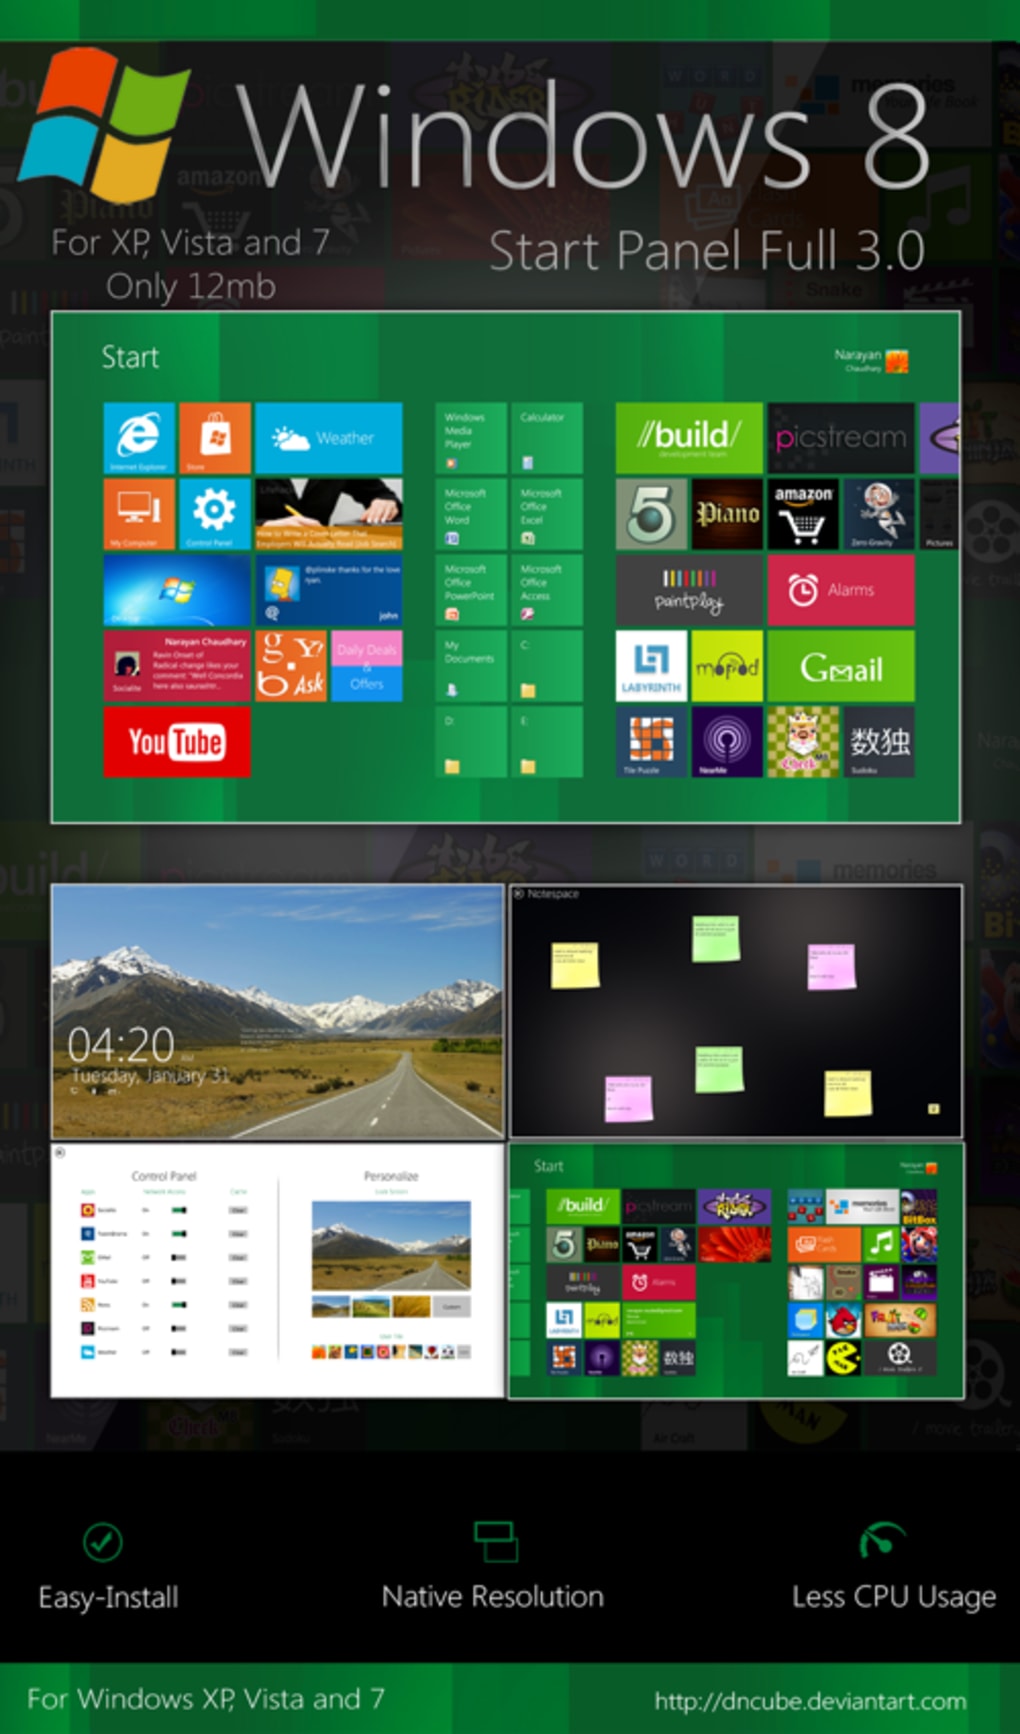 Windows 8 Start Screen For Windows Xp,vista And 7